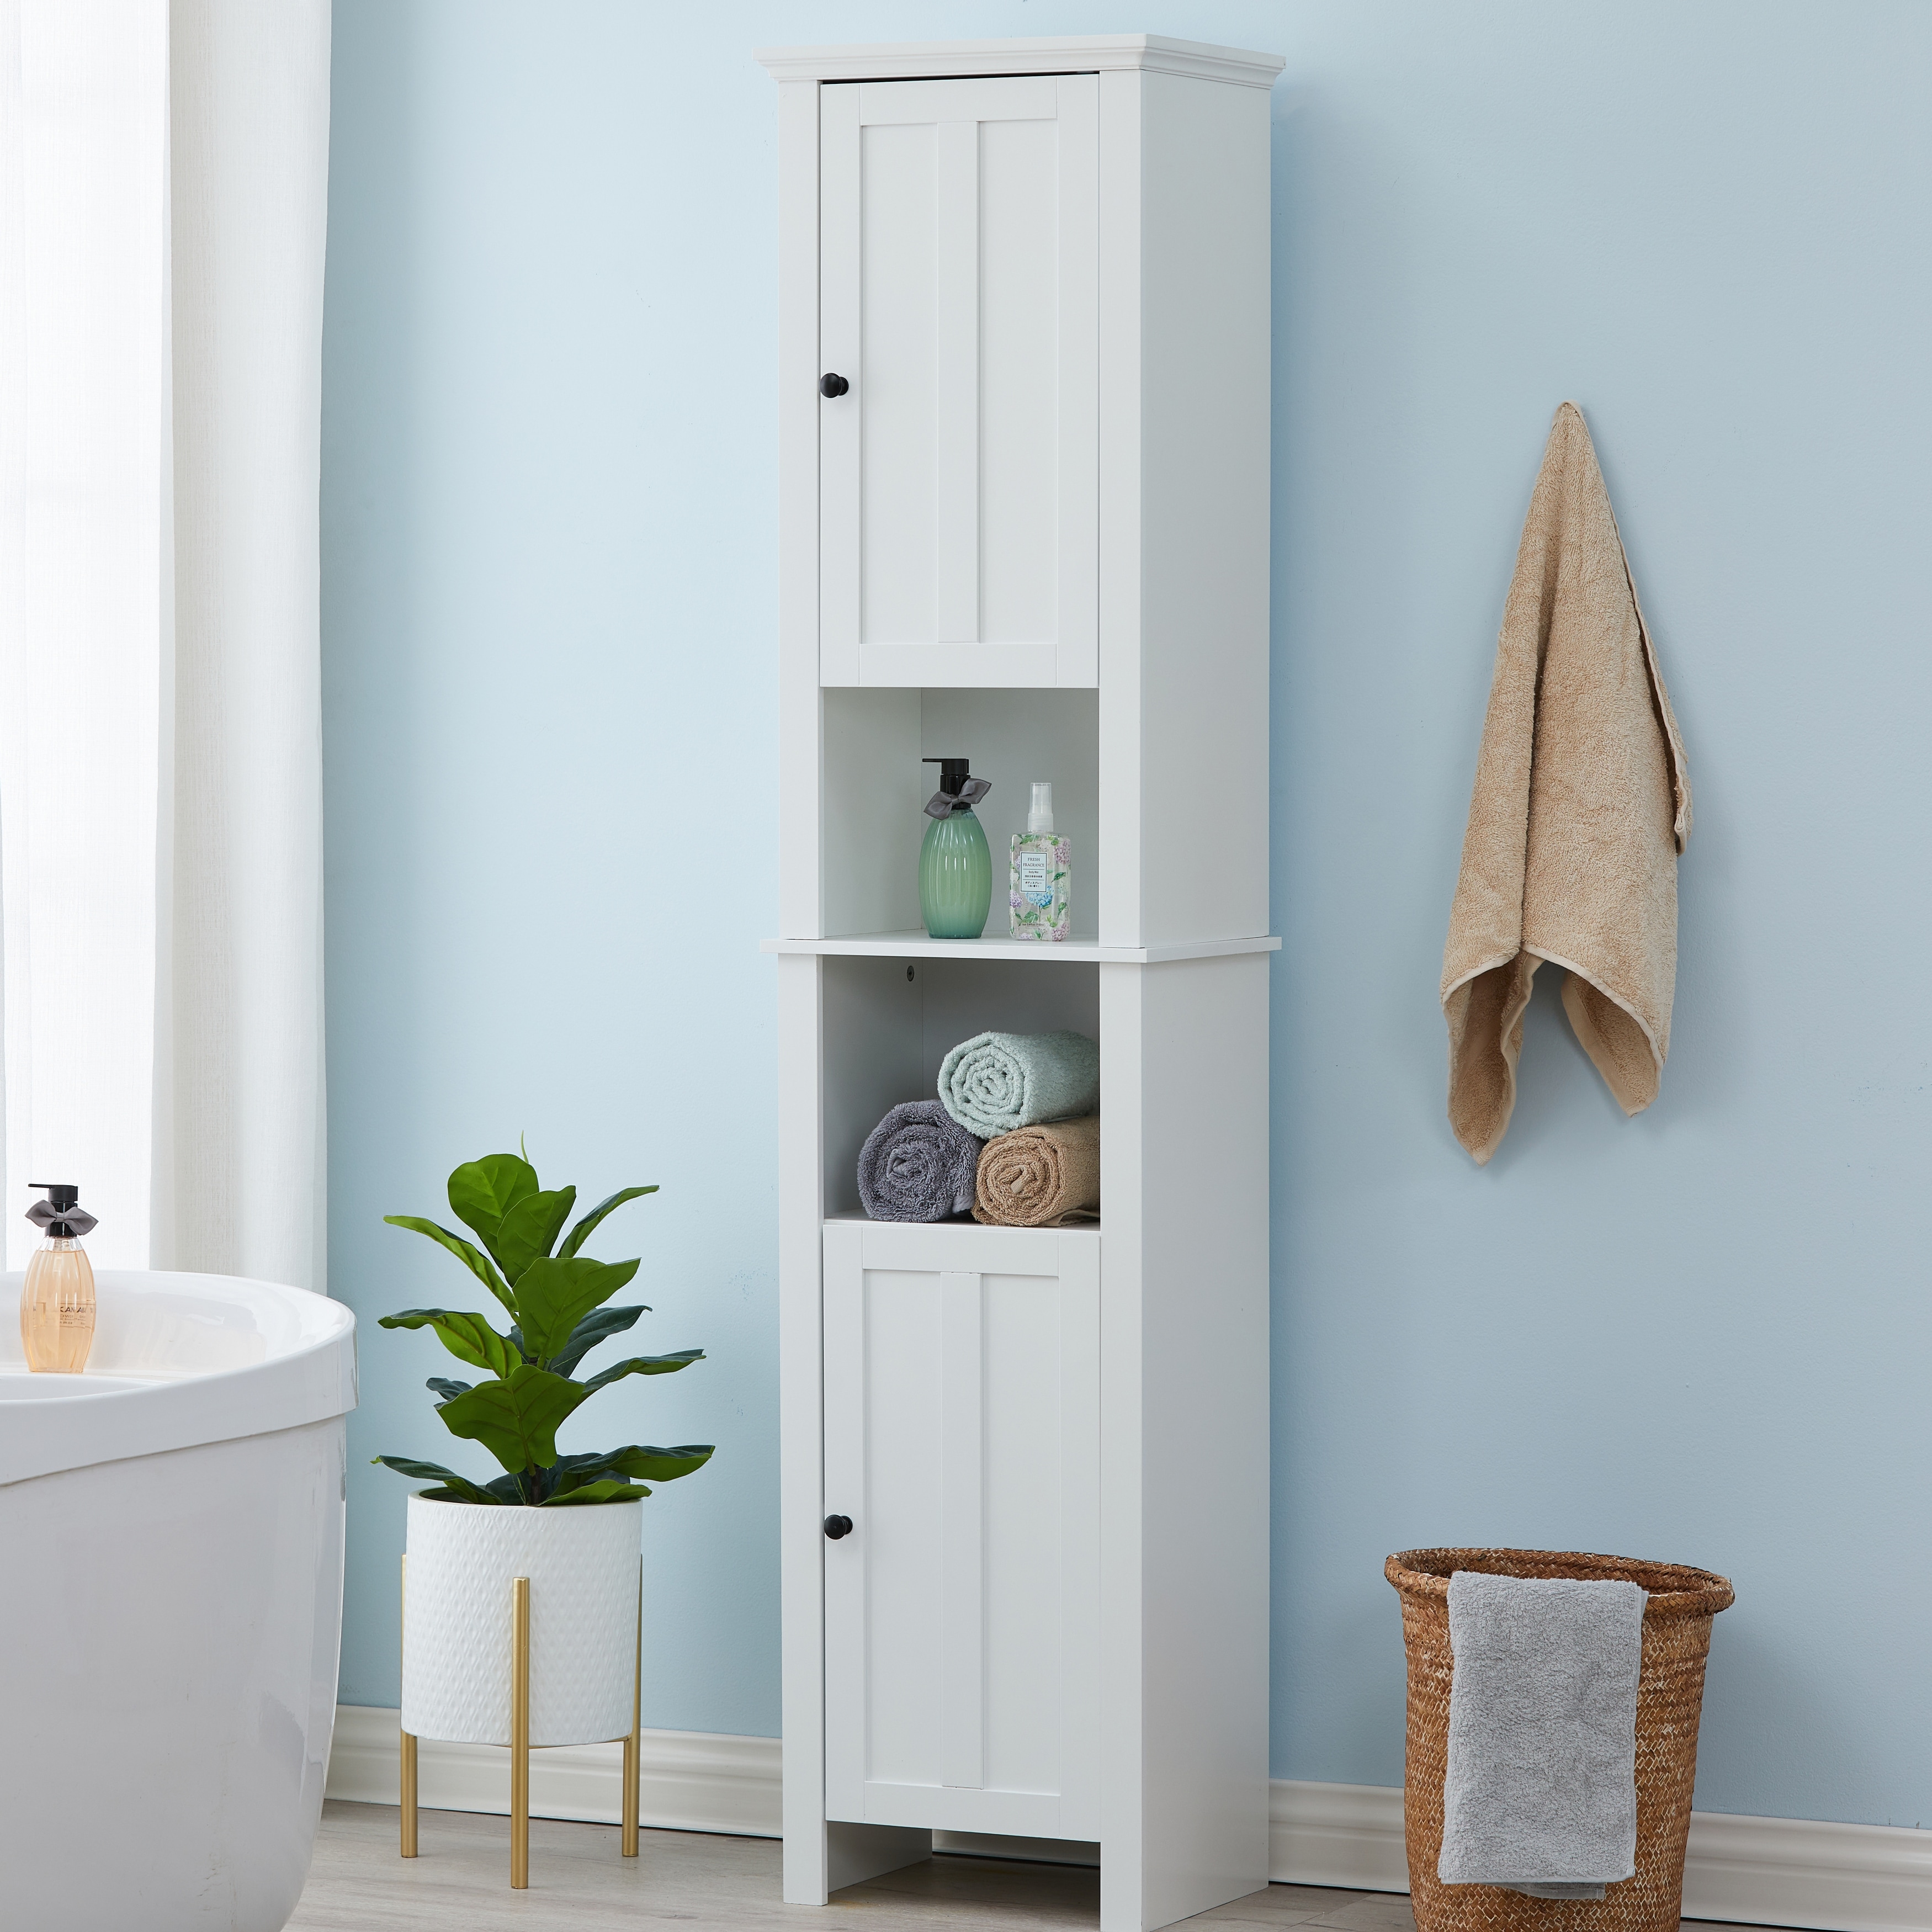 1 Door Bathroom Linen Cabinet Tower Furniture Tall Drawer Shelves White Bath New